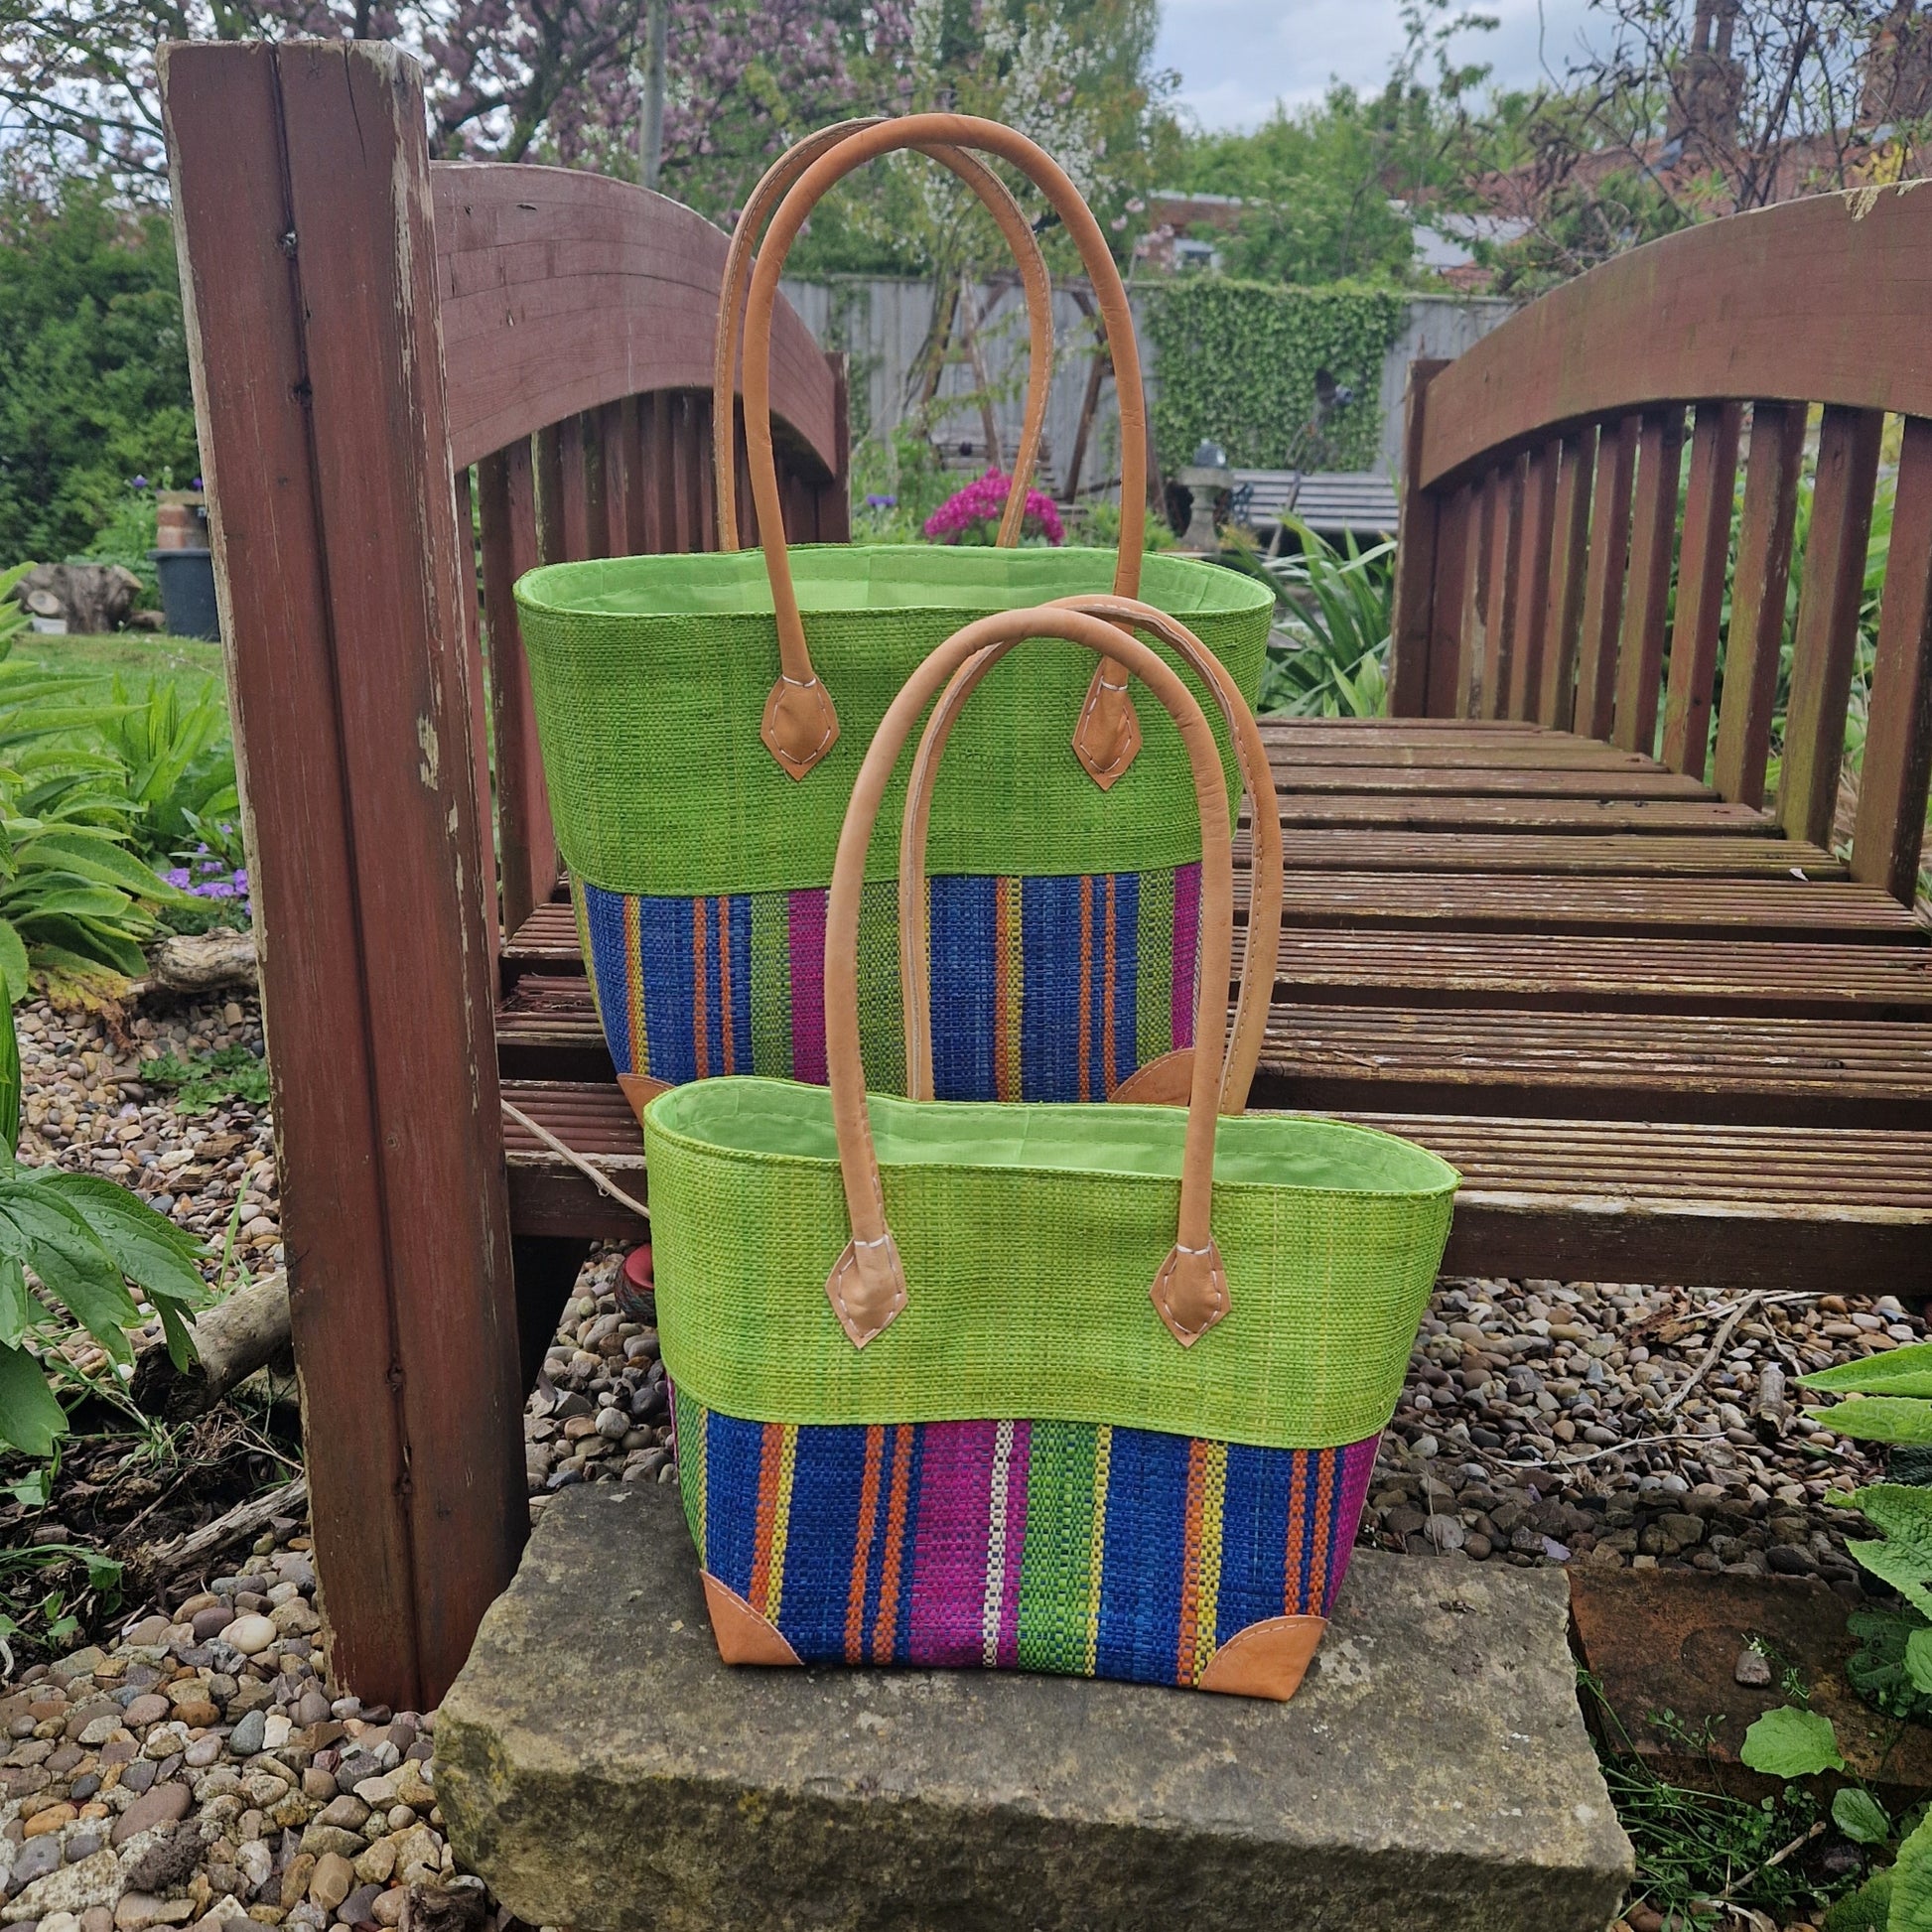 Lime green coloured raffia basket with rainbow stripes